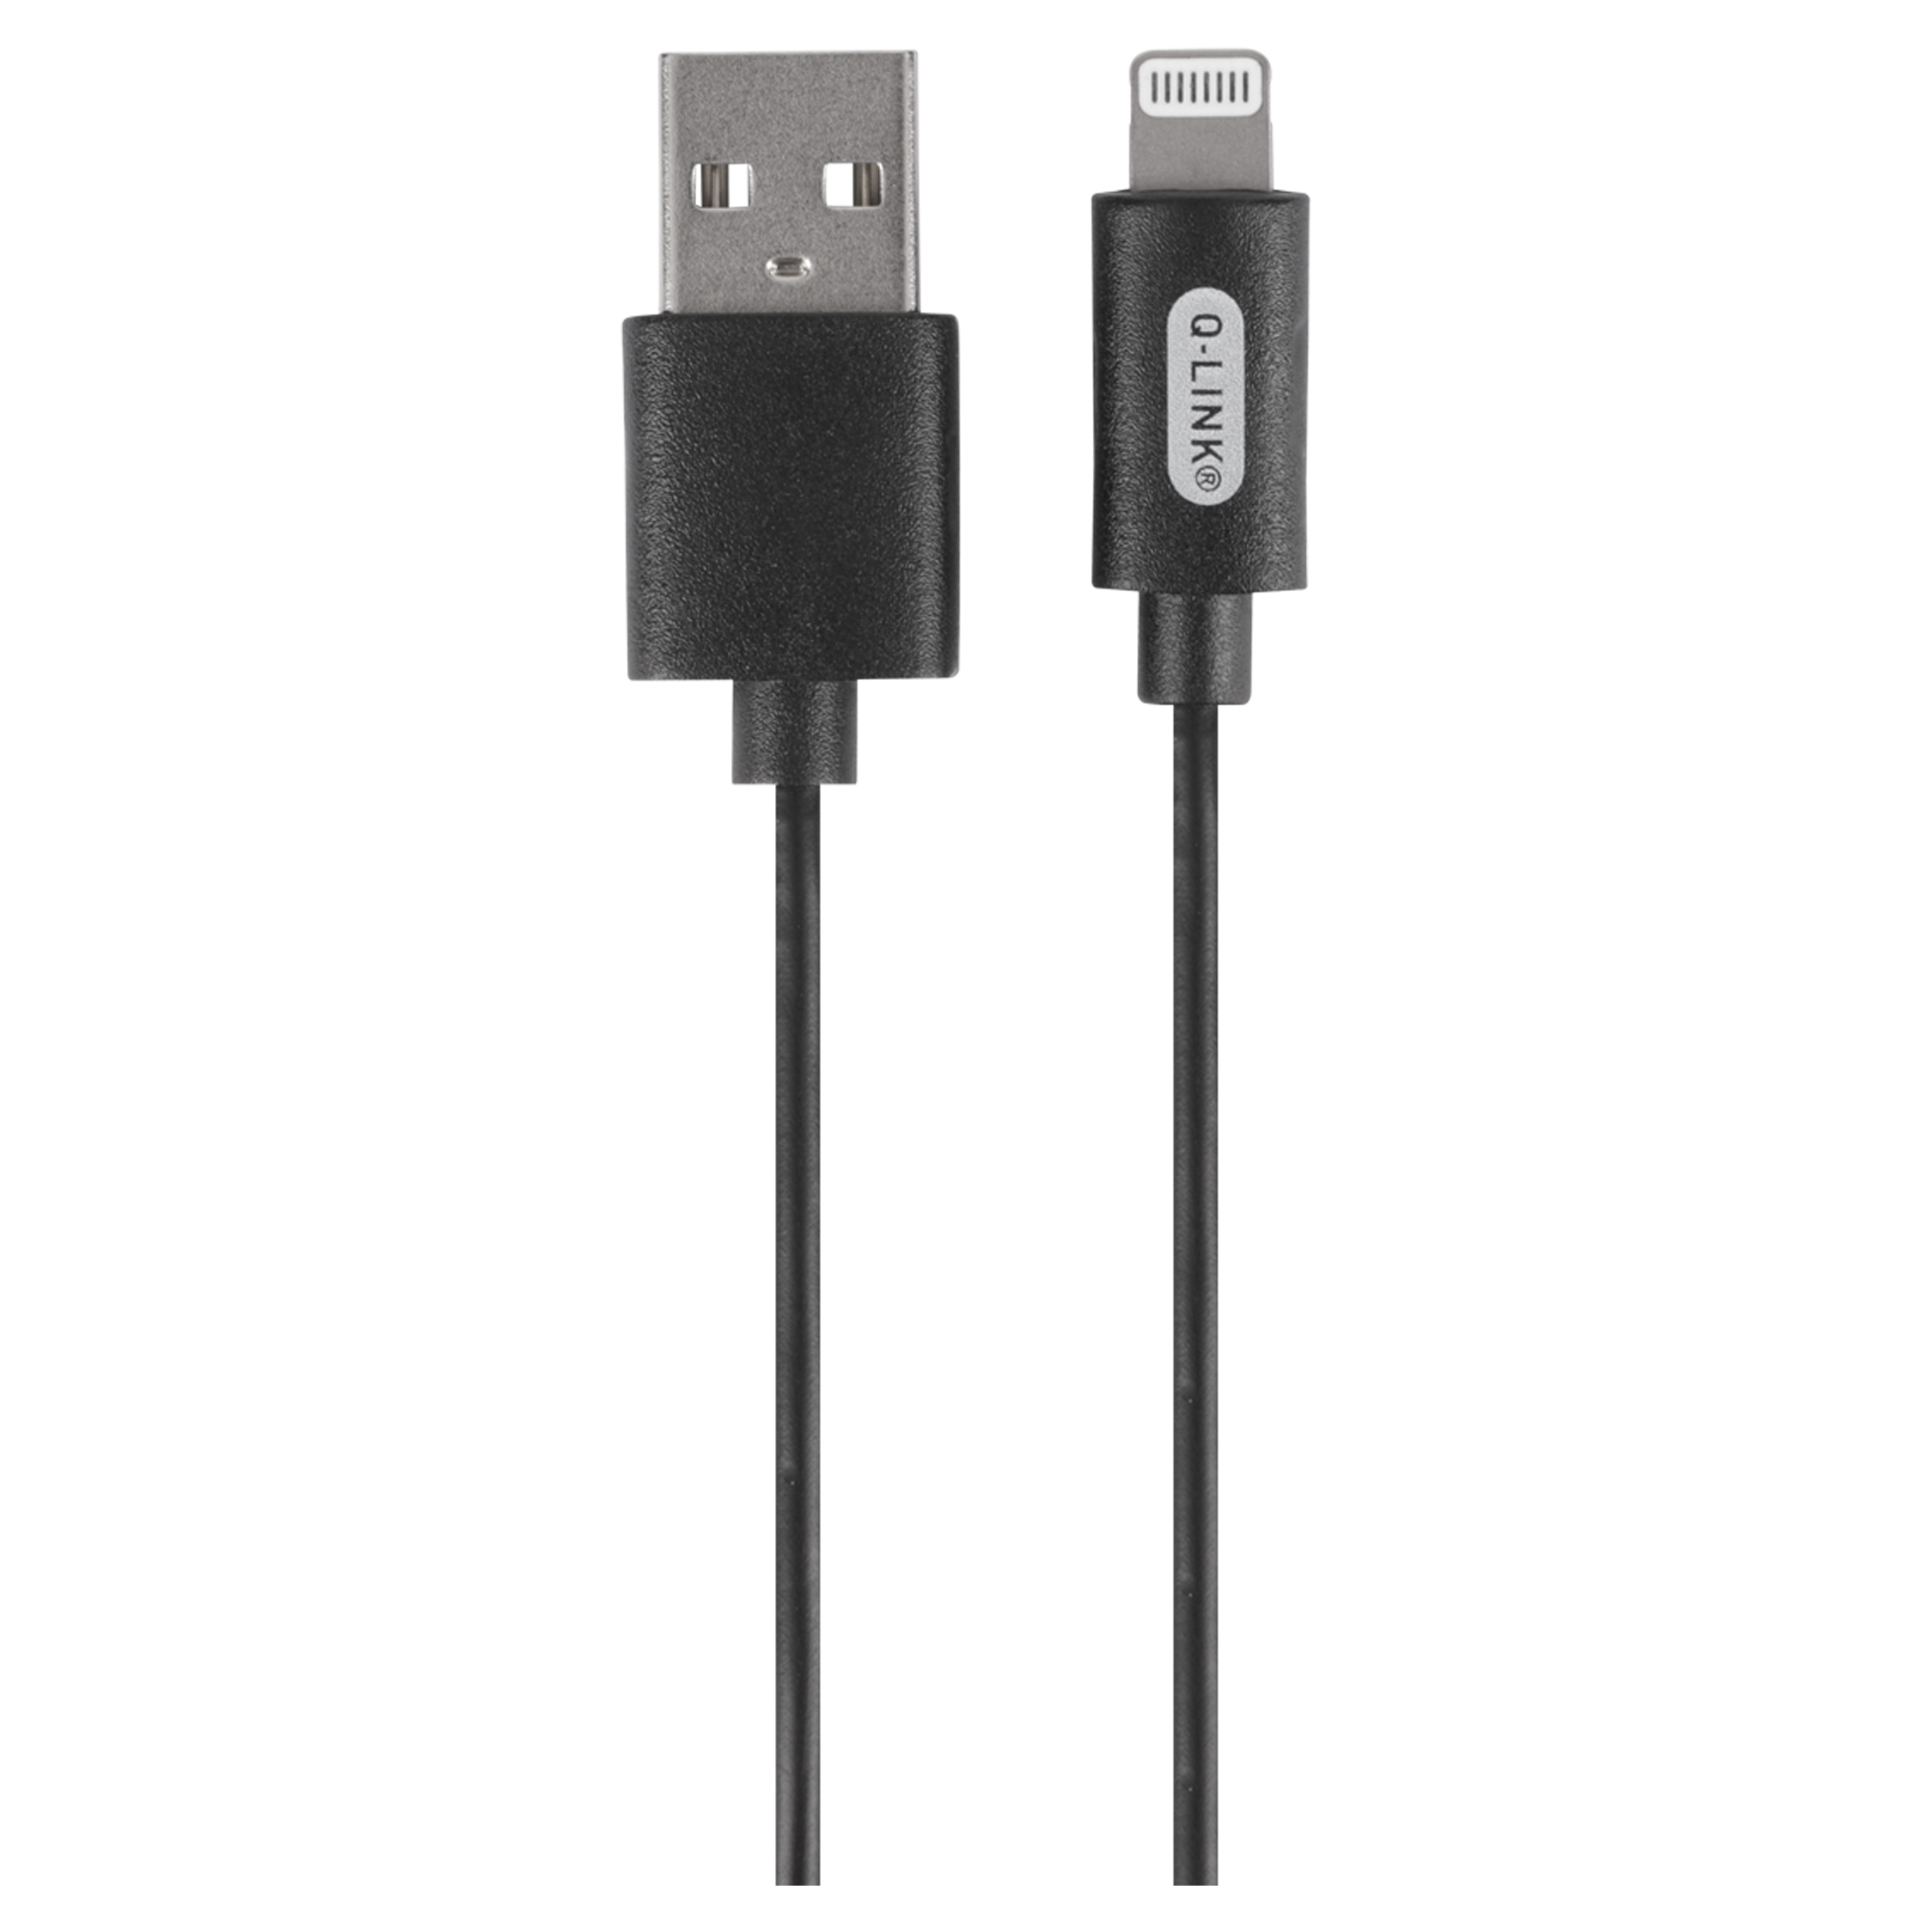 00.133.60 Q-Link  datakabel USB-iPhone - MFI - 1 m - zwart